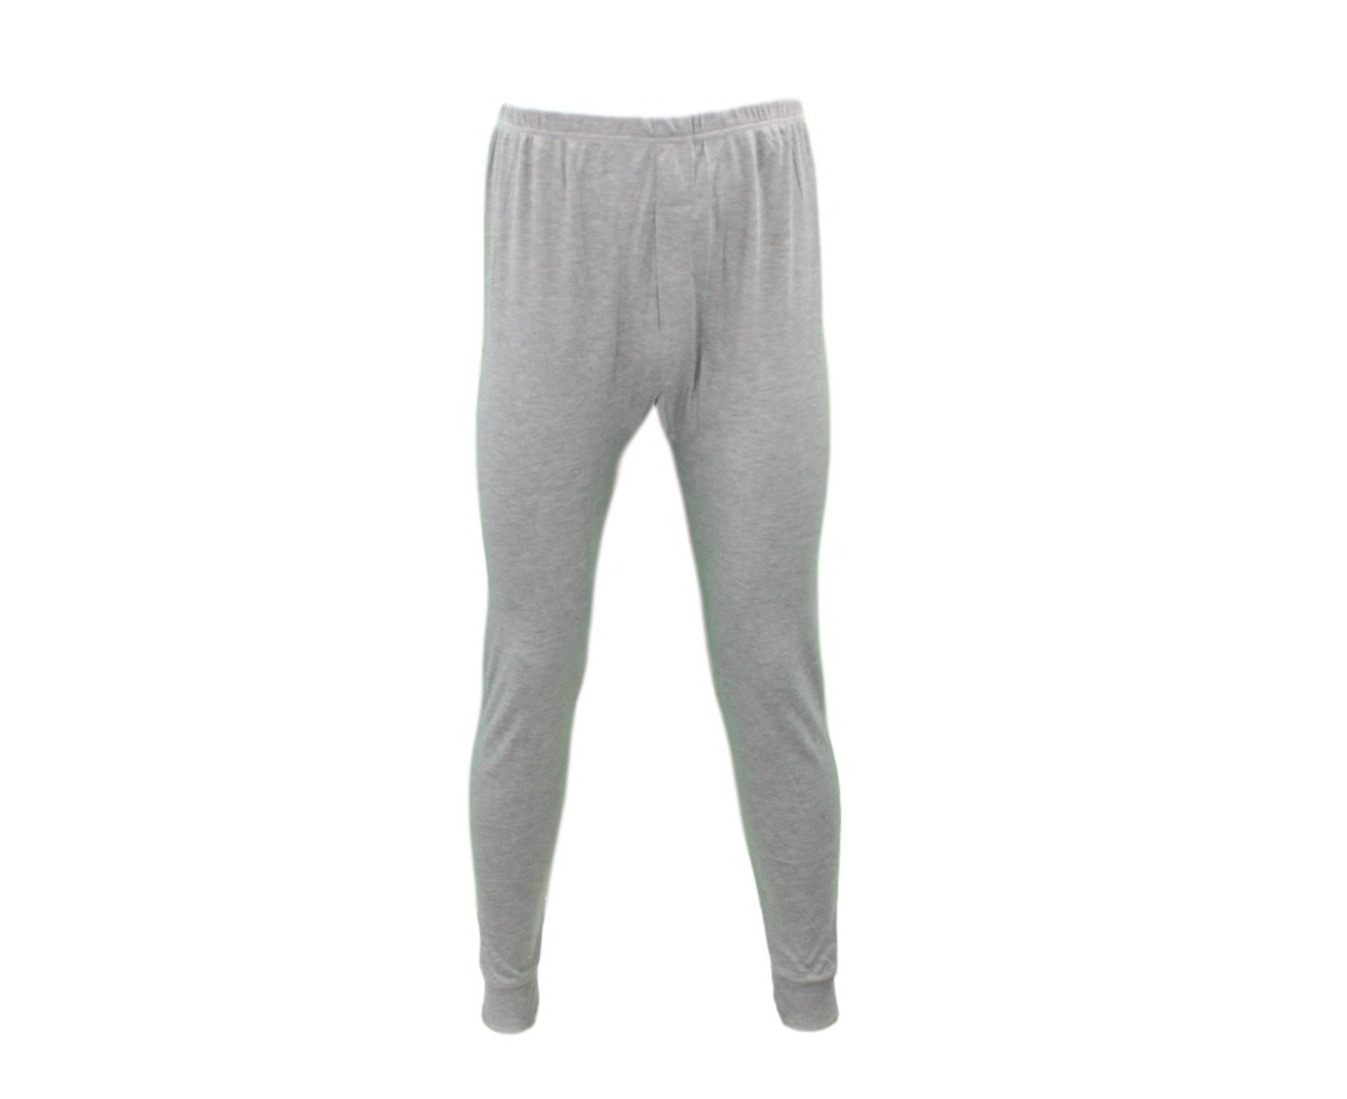 FIL Men's Cotton Thermal Pants Leggings Long Johns Underwear - Men's Long  Johns - Grey